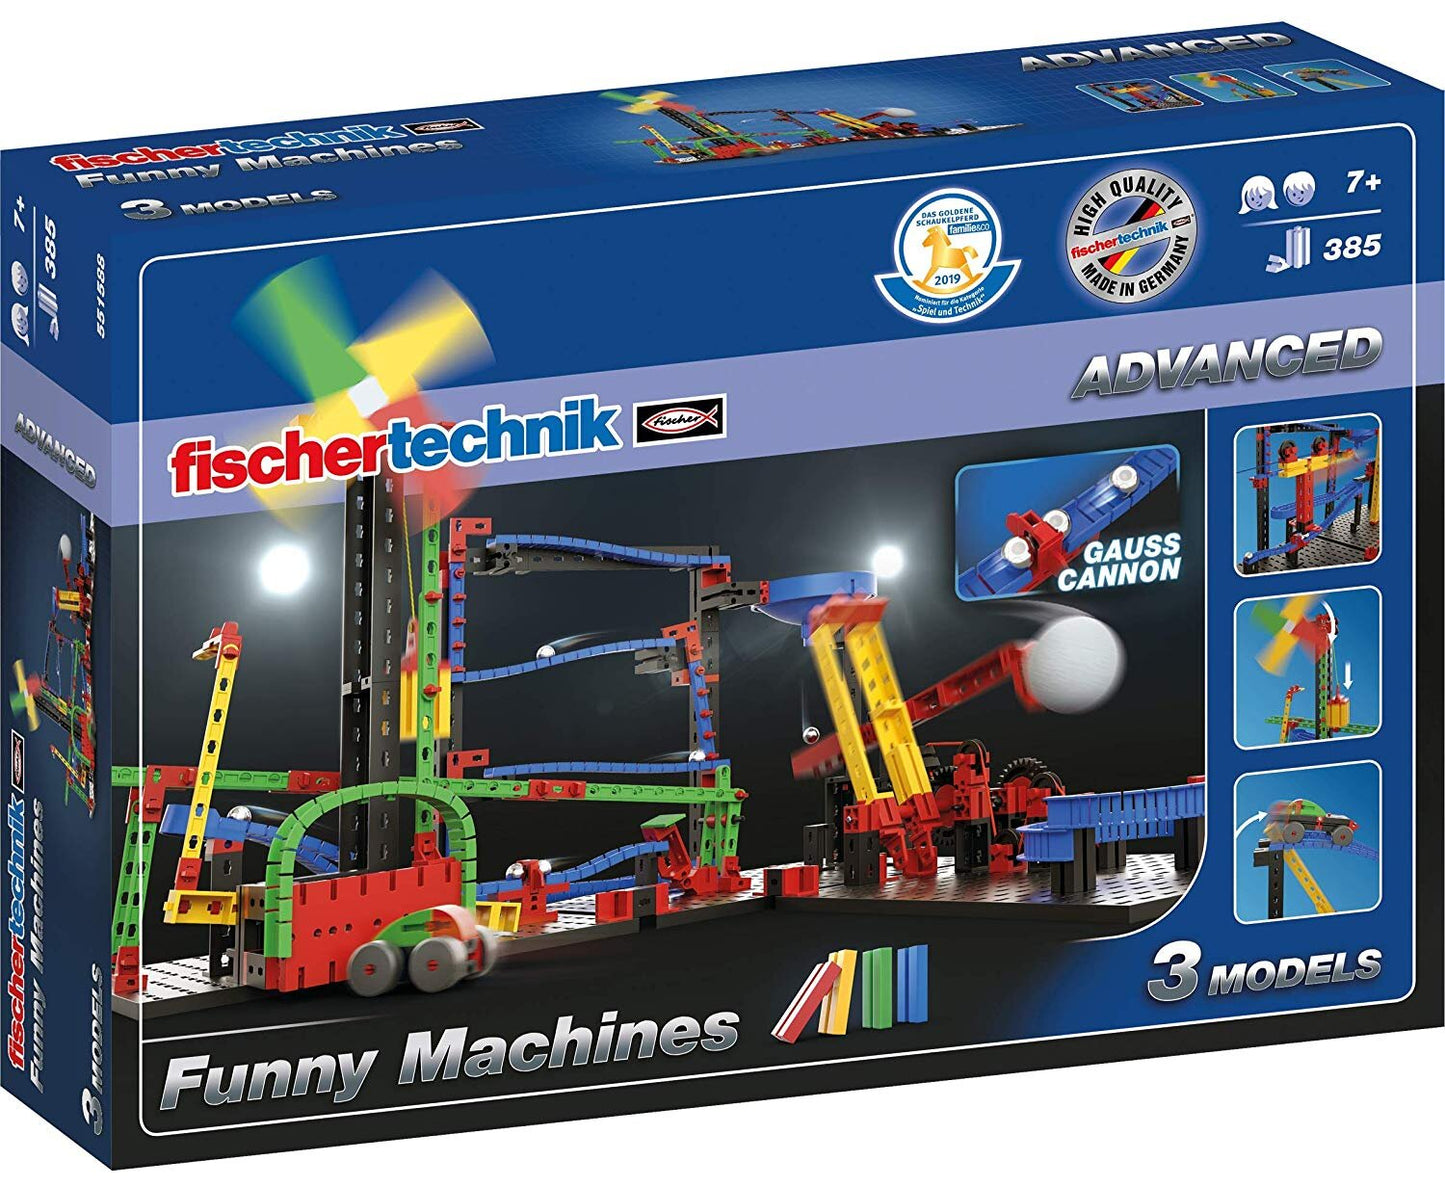 fischertechnik ADVANCED Funny Machines Construction Kit